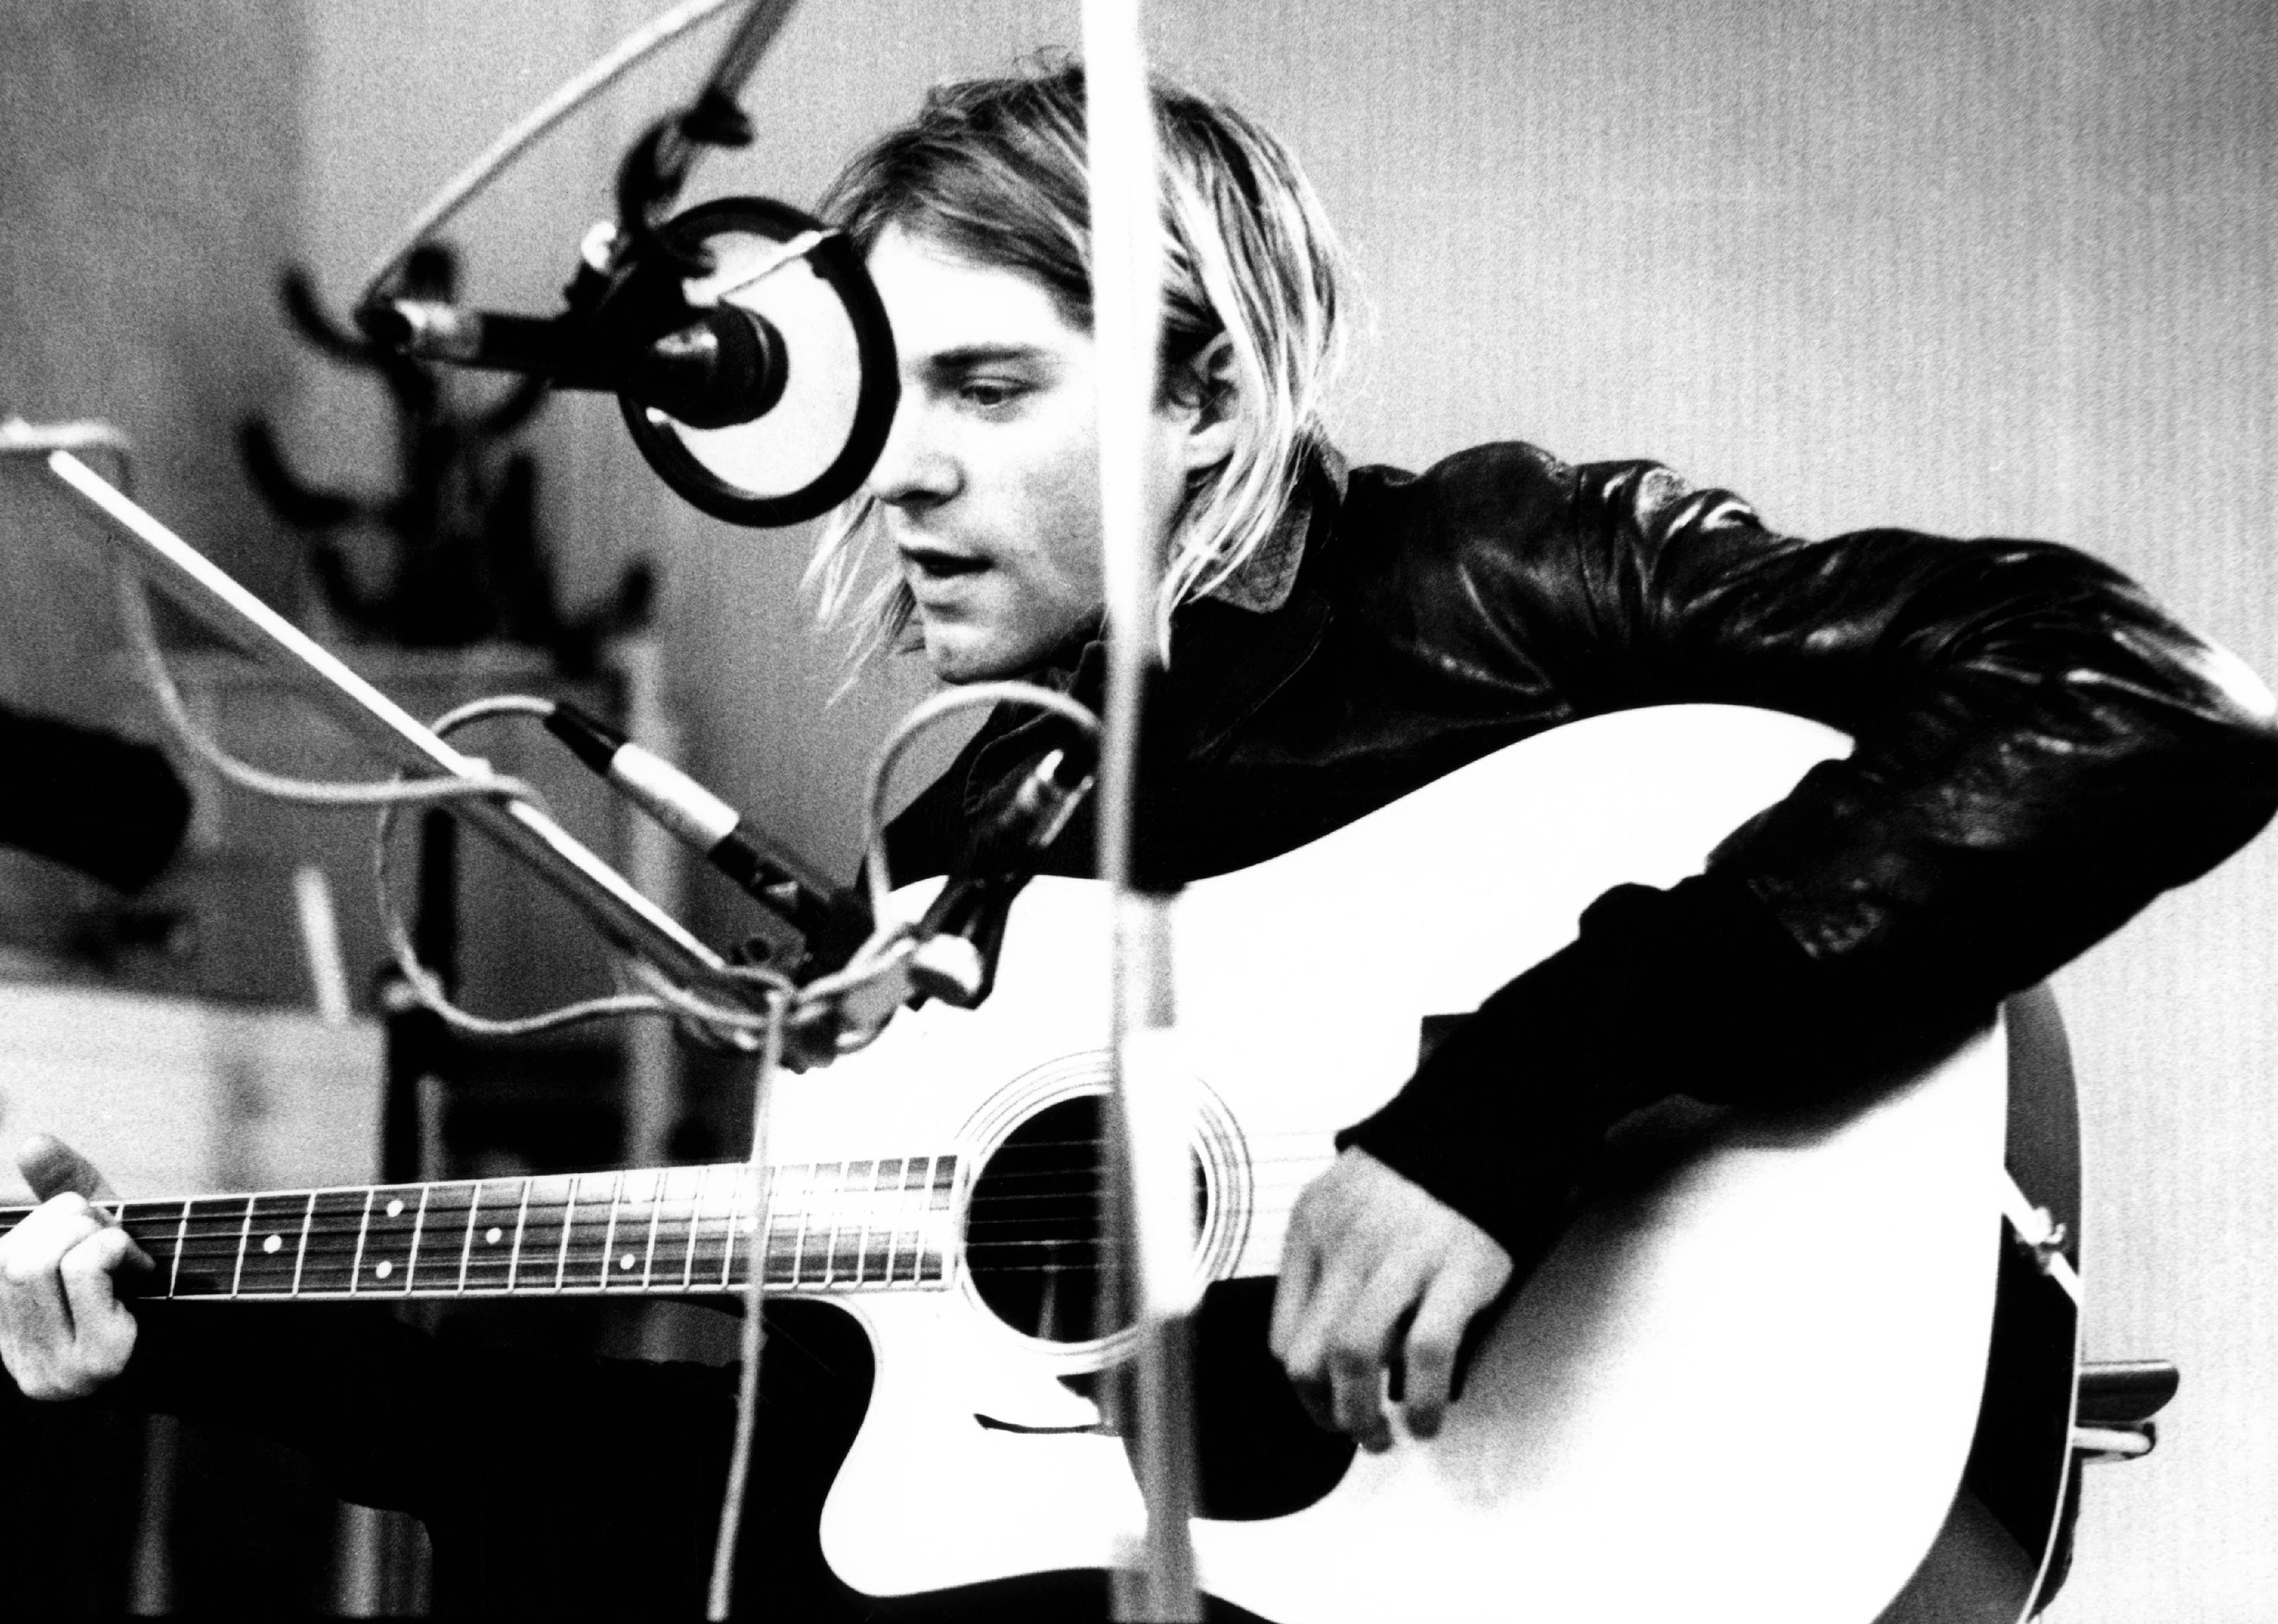 Kurt Cobain recording in Hilversum studios.